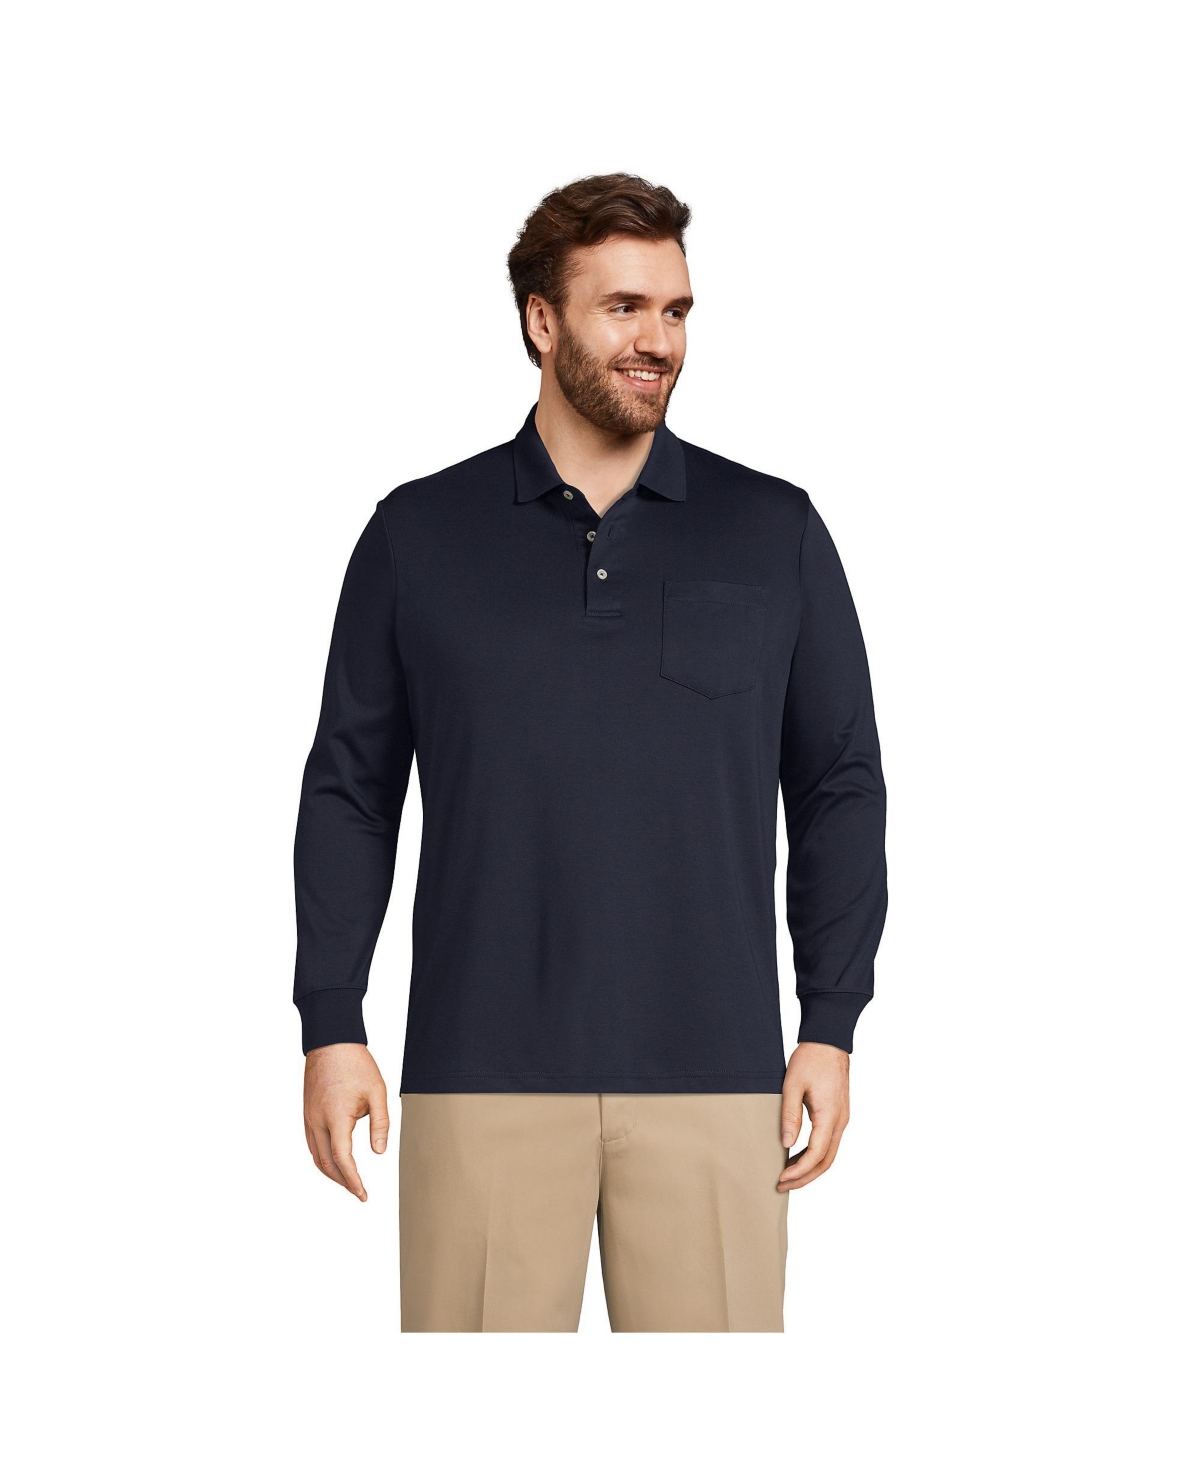 Big & Tall Long Sleeve Super Soft Supima Polo Shirt with Pocket - Radiant navy